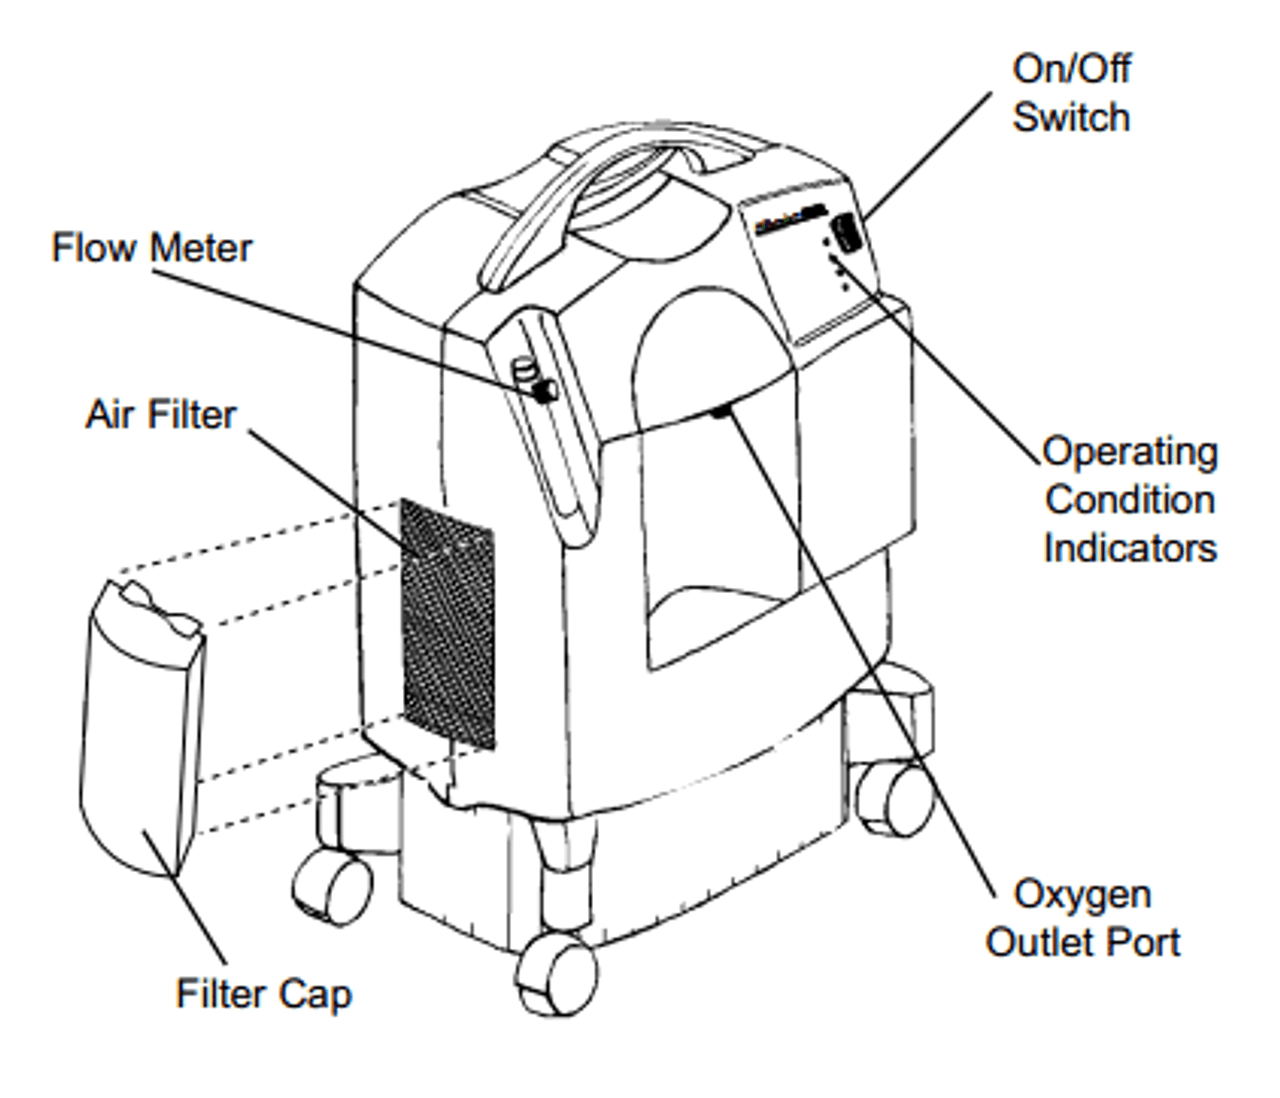 Millenium M10 Oxygen Concentrator 